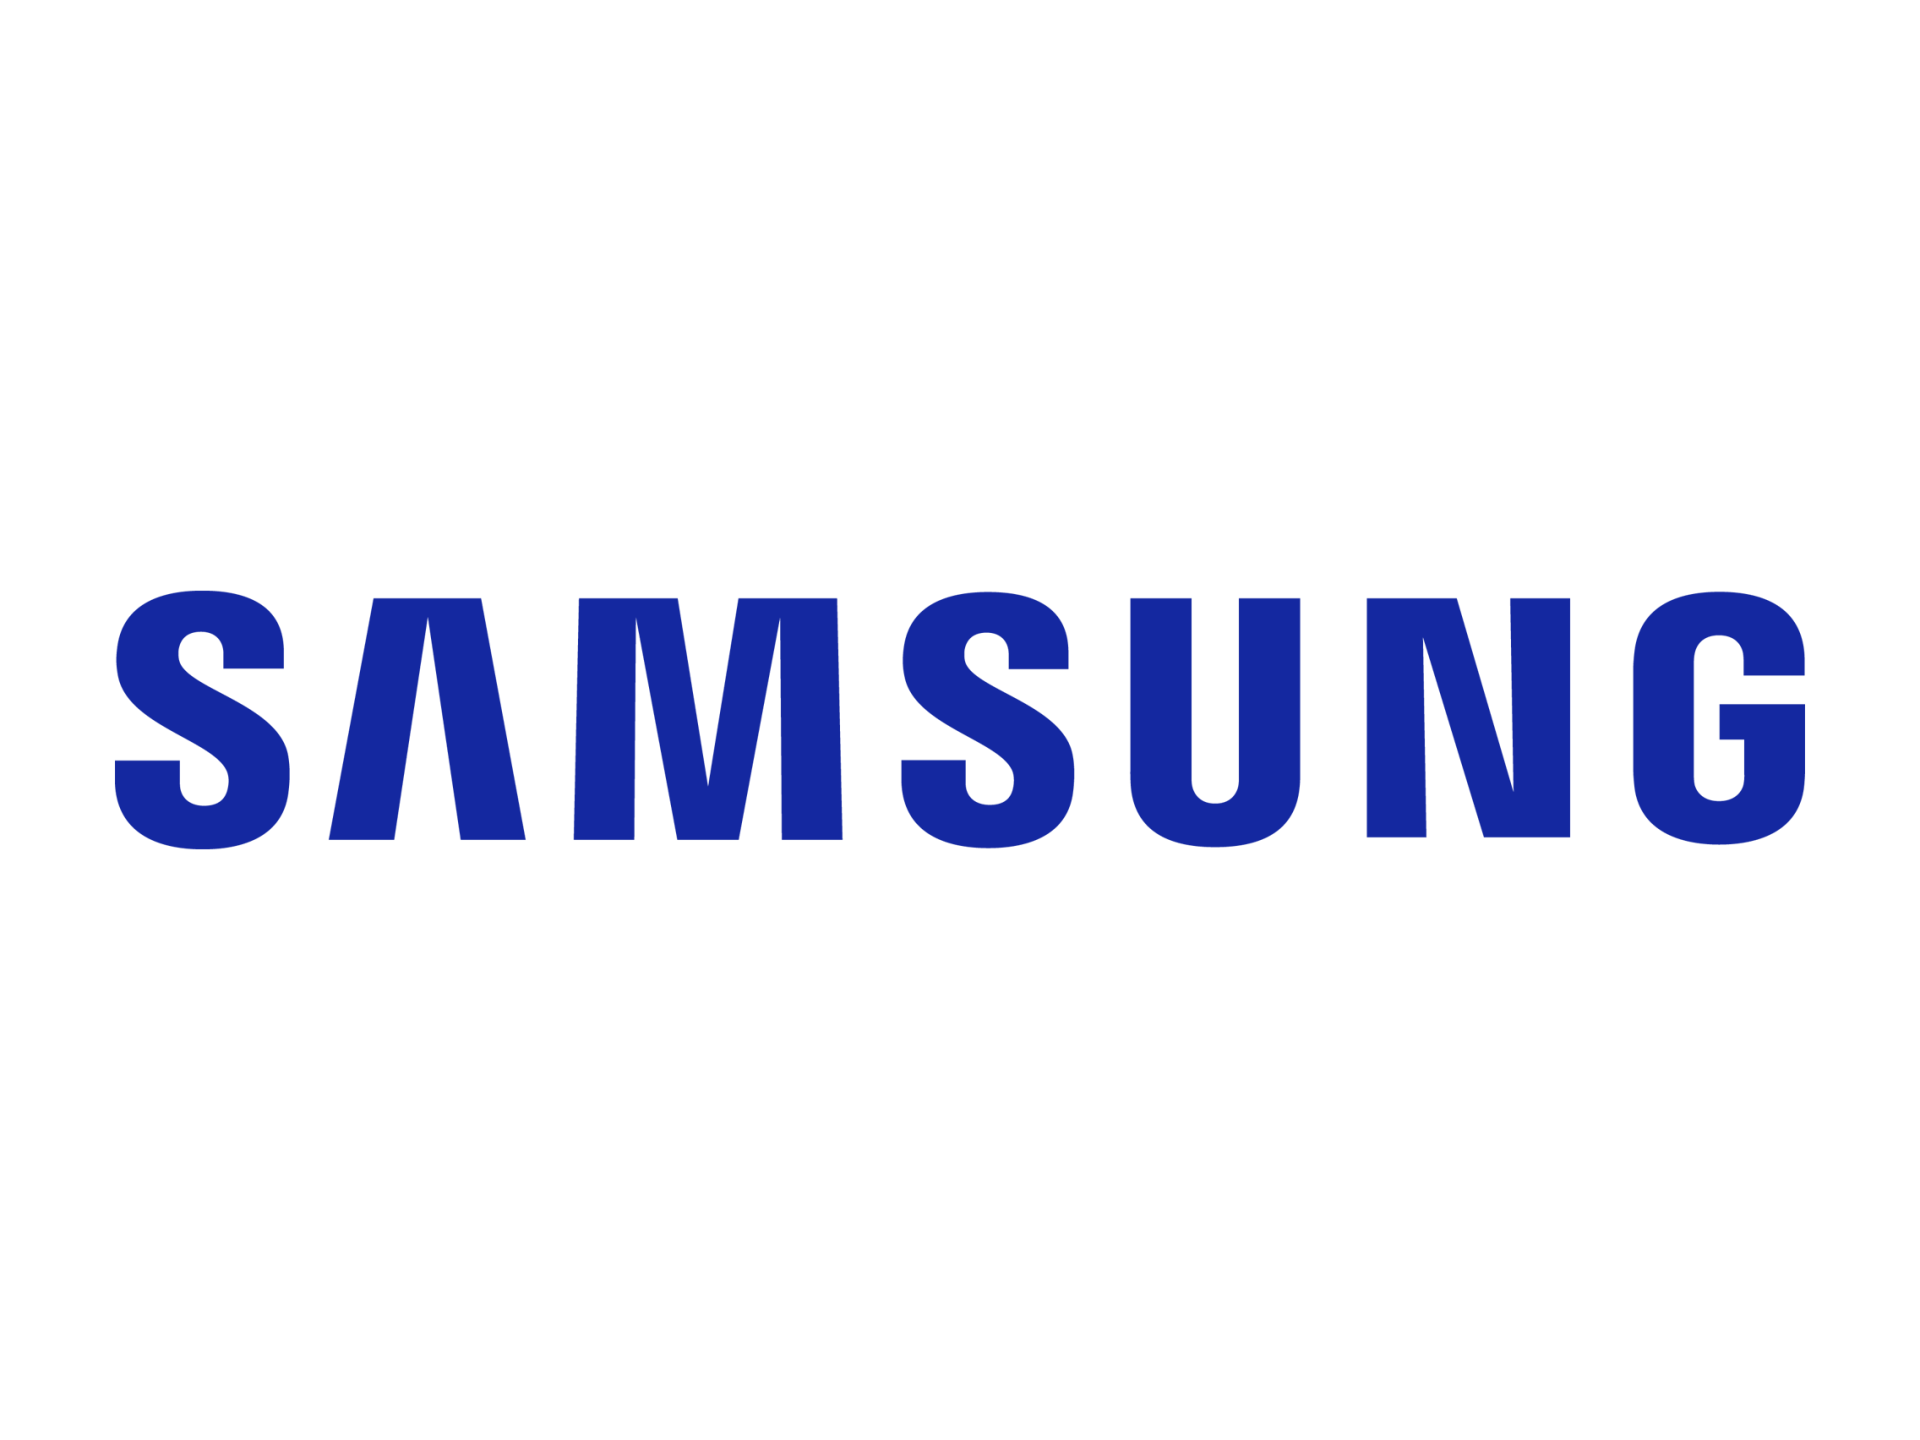 Samsung, Uzbekistan sign agreement on postal infrastructure modernization